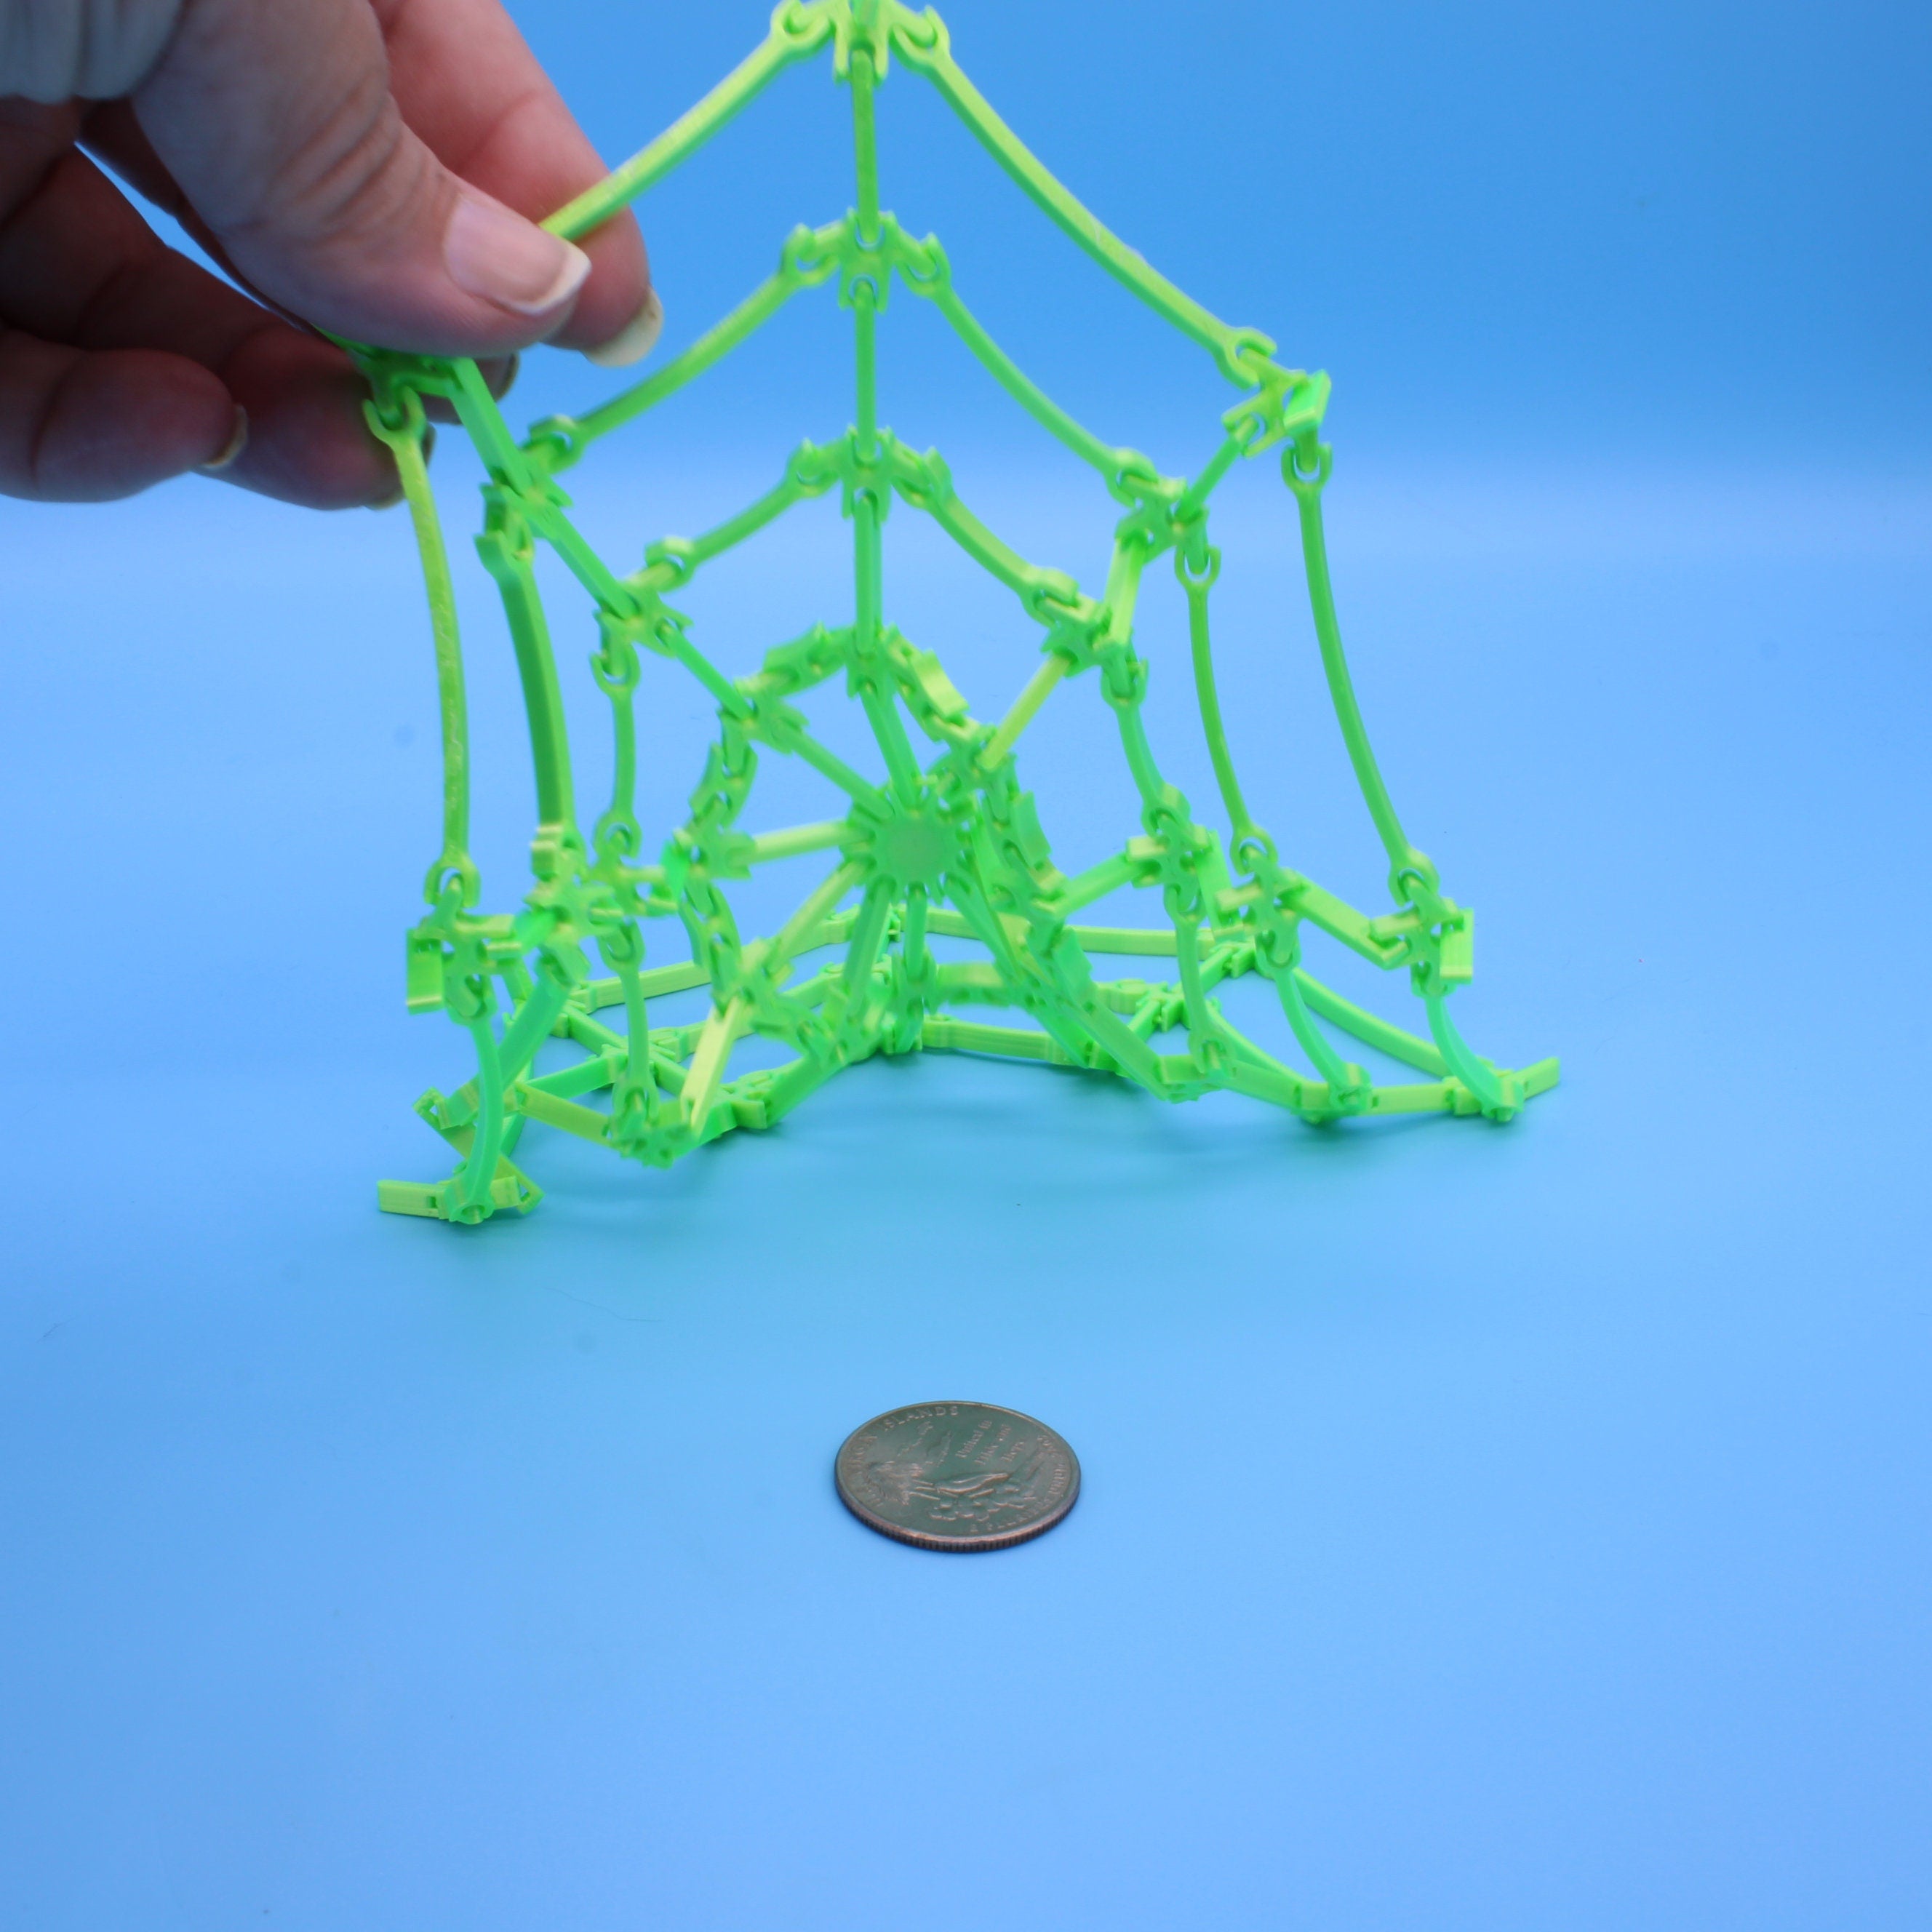 The 3D Spider’s Web | 3D Printed | Unique 3d Printed Spider Webd